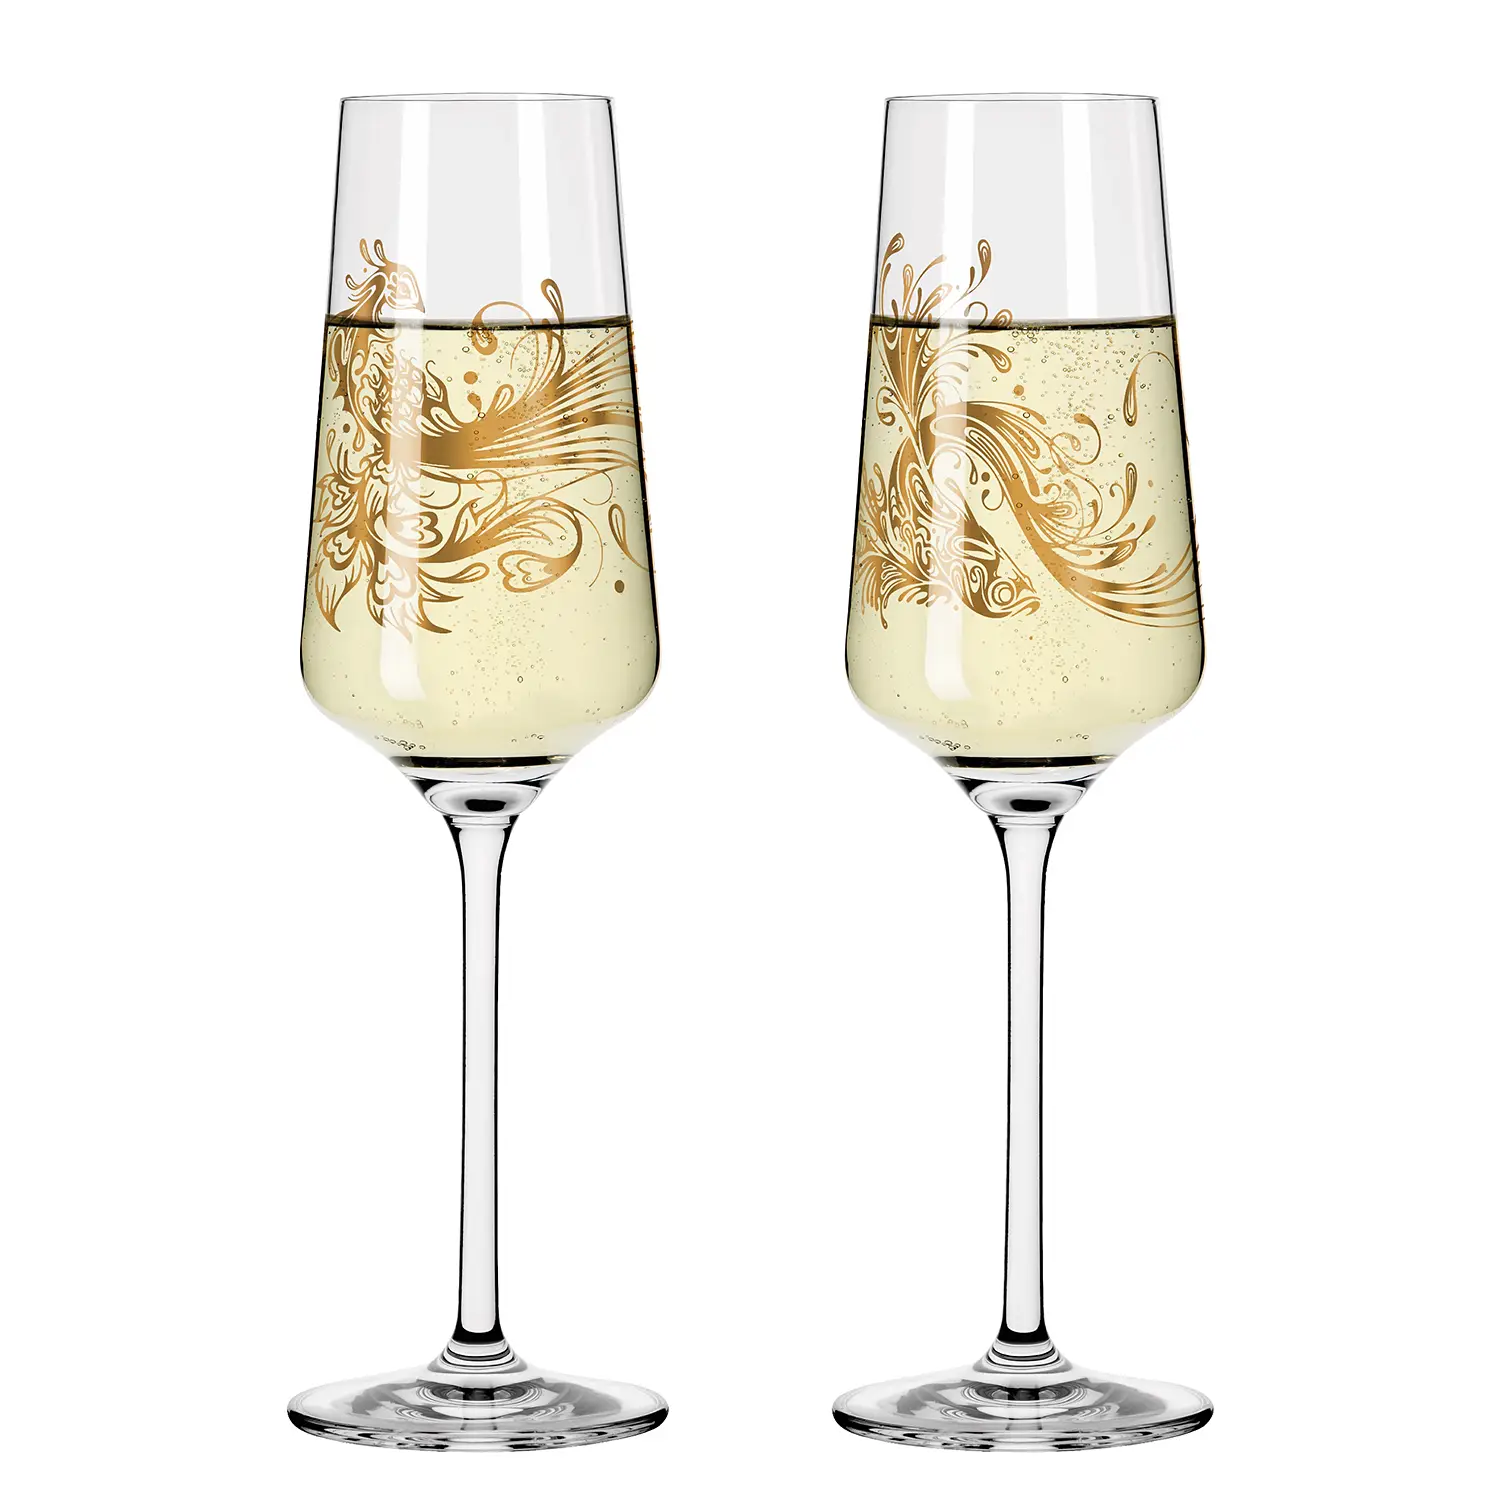 Champagnerglas Ros茅hauch I (2er-Set) | Sektgläser & Champagnergläser